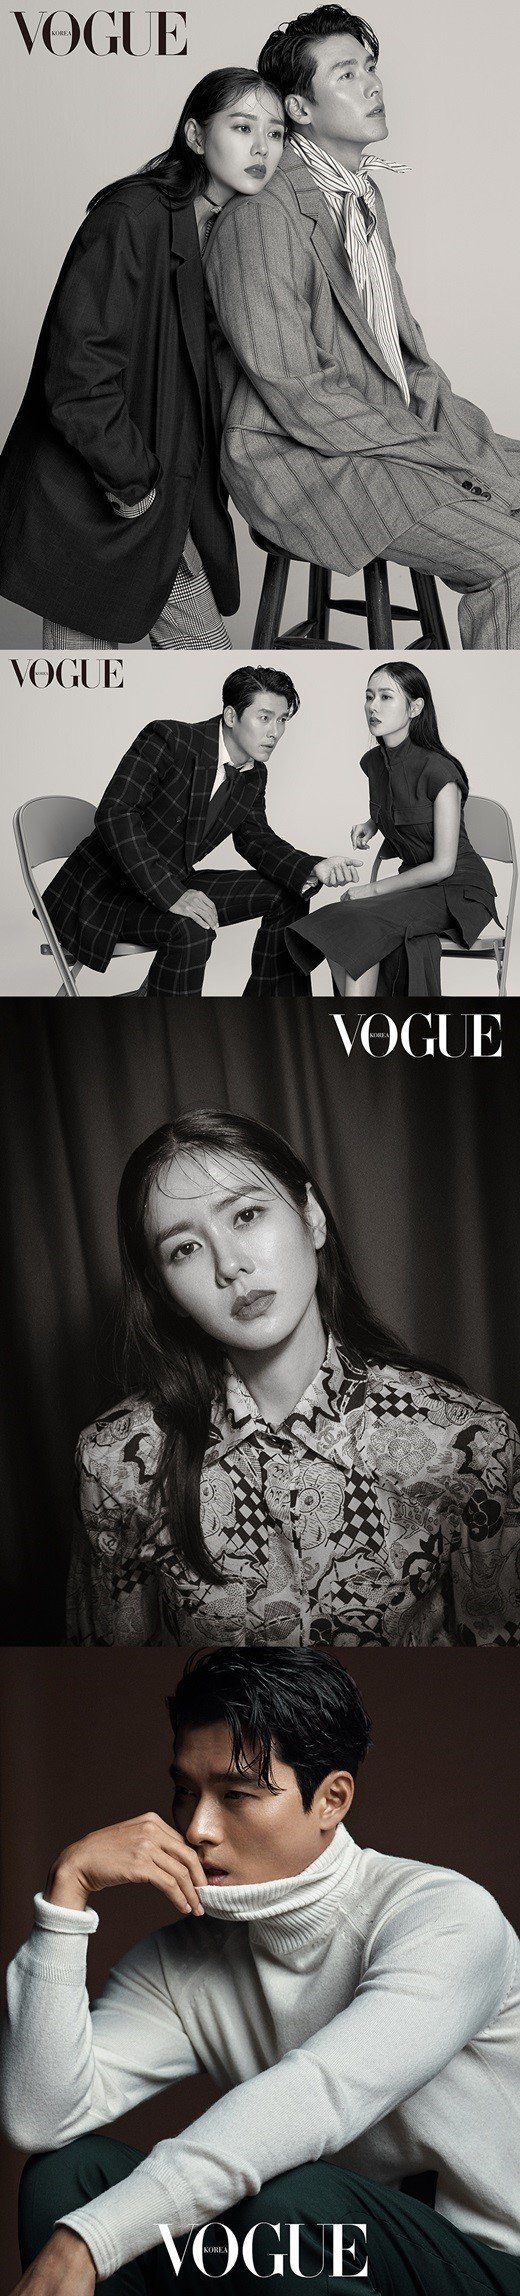 Хён Бин и Сон Е Джин в фотосессии журнала "Vogue"